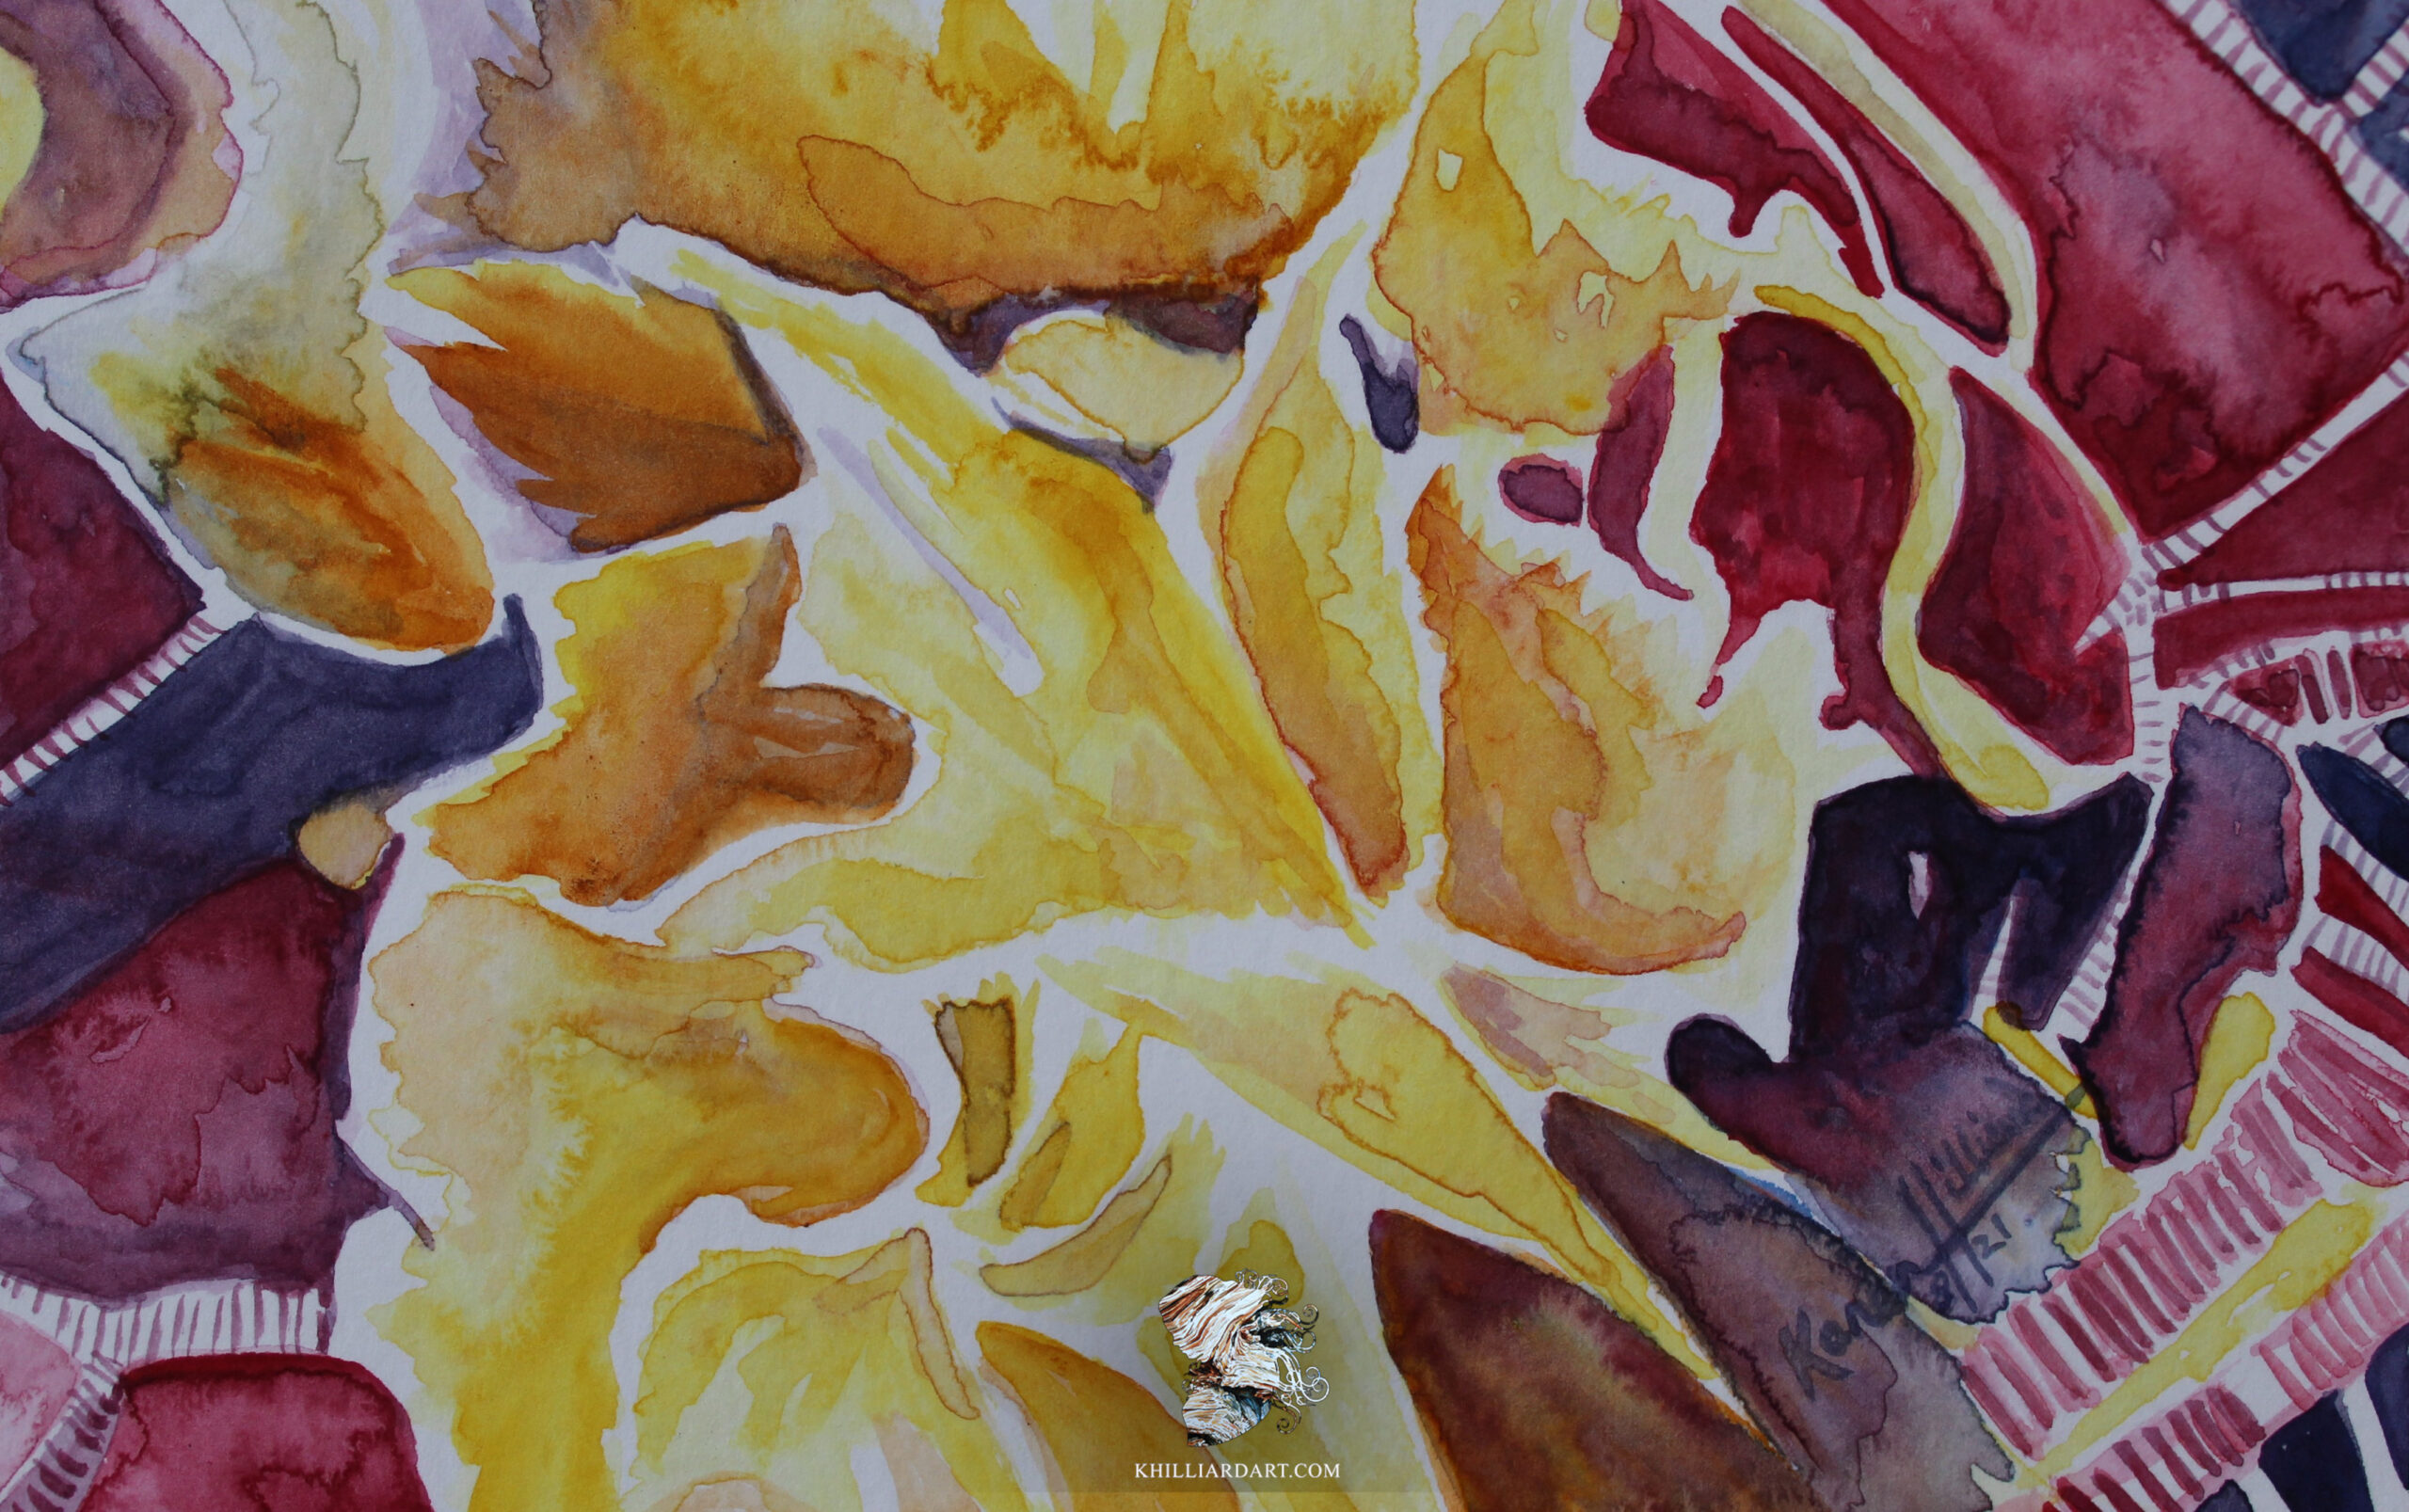 Red Rock Canyon Series 1 #6|Karen Hilliard Art|Watercolor|Tiny Paintings|4x6